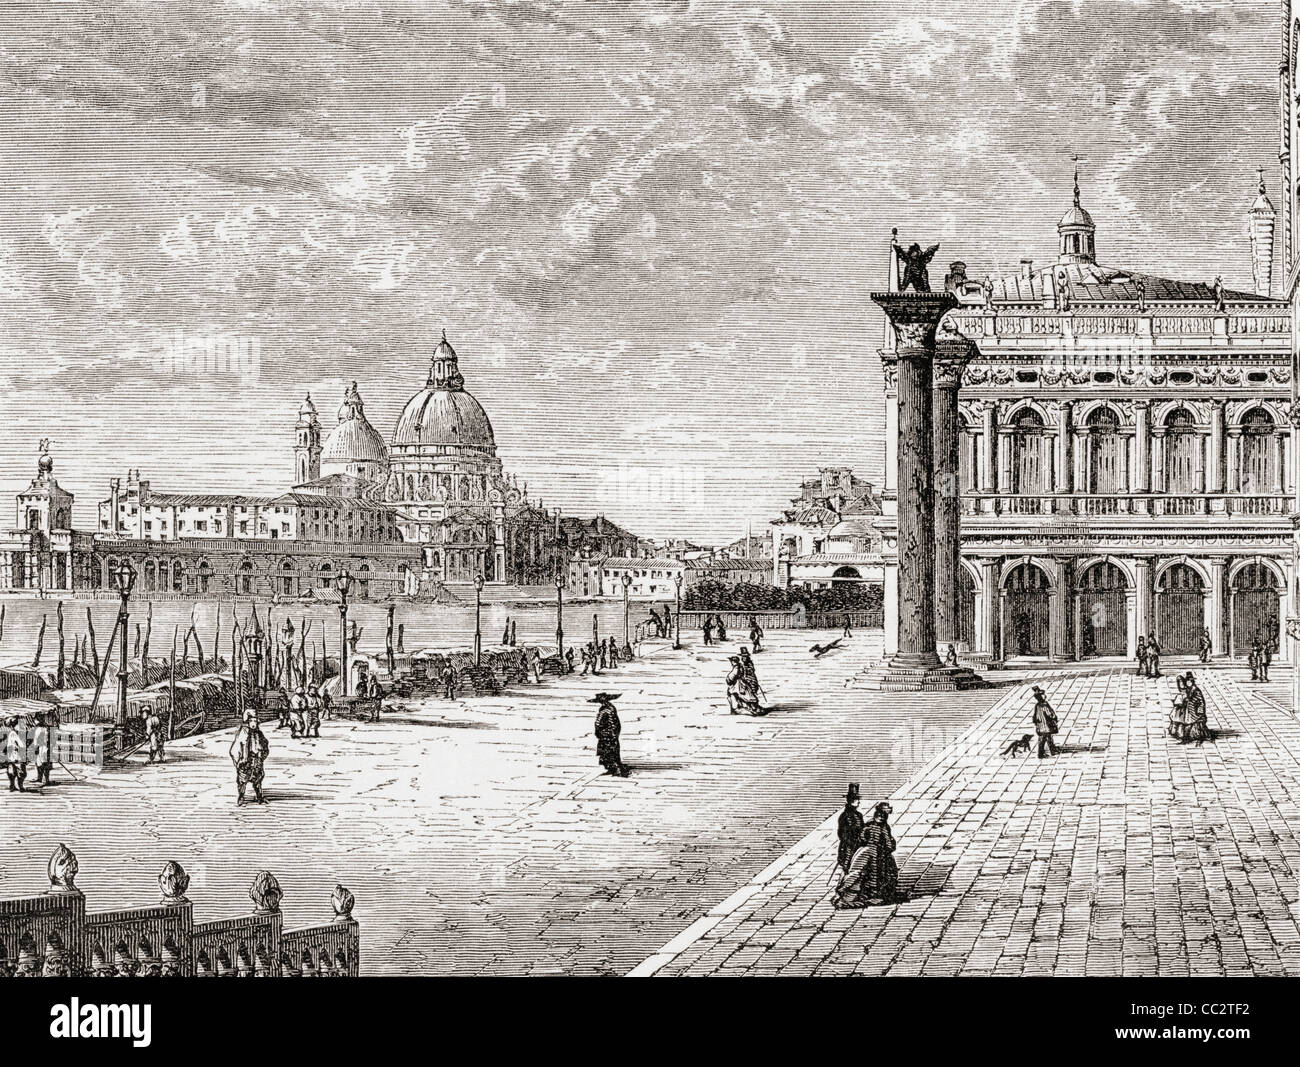 Piazza San Marco oder St. Markus Platz, Venedig, Italien im späten 19. Jahrhundert. Stockfoto